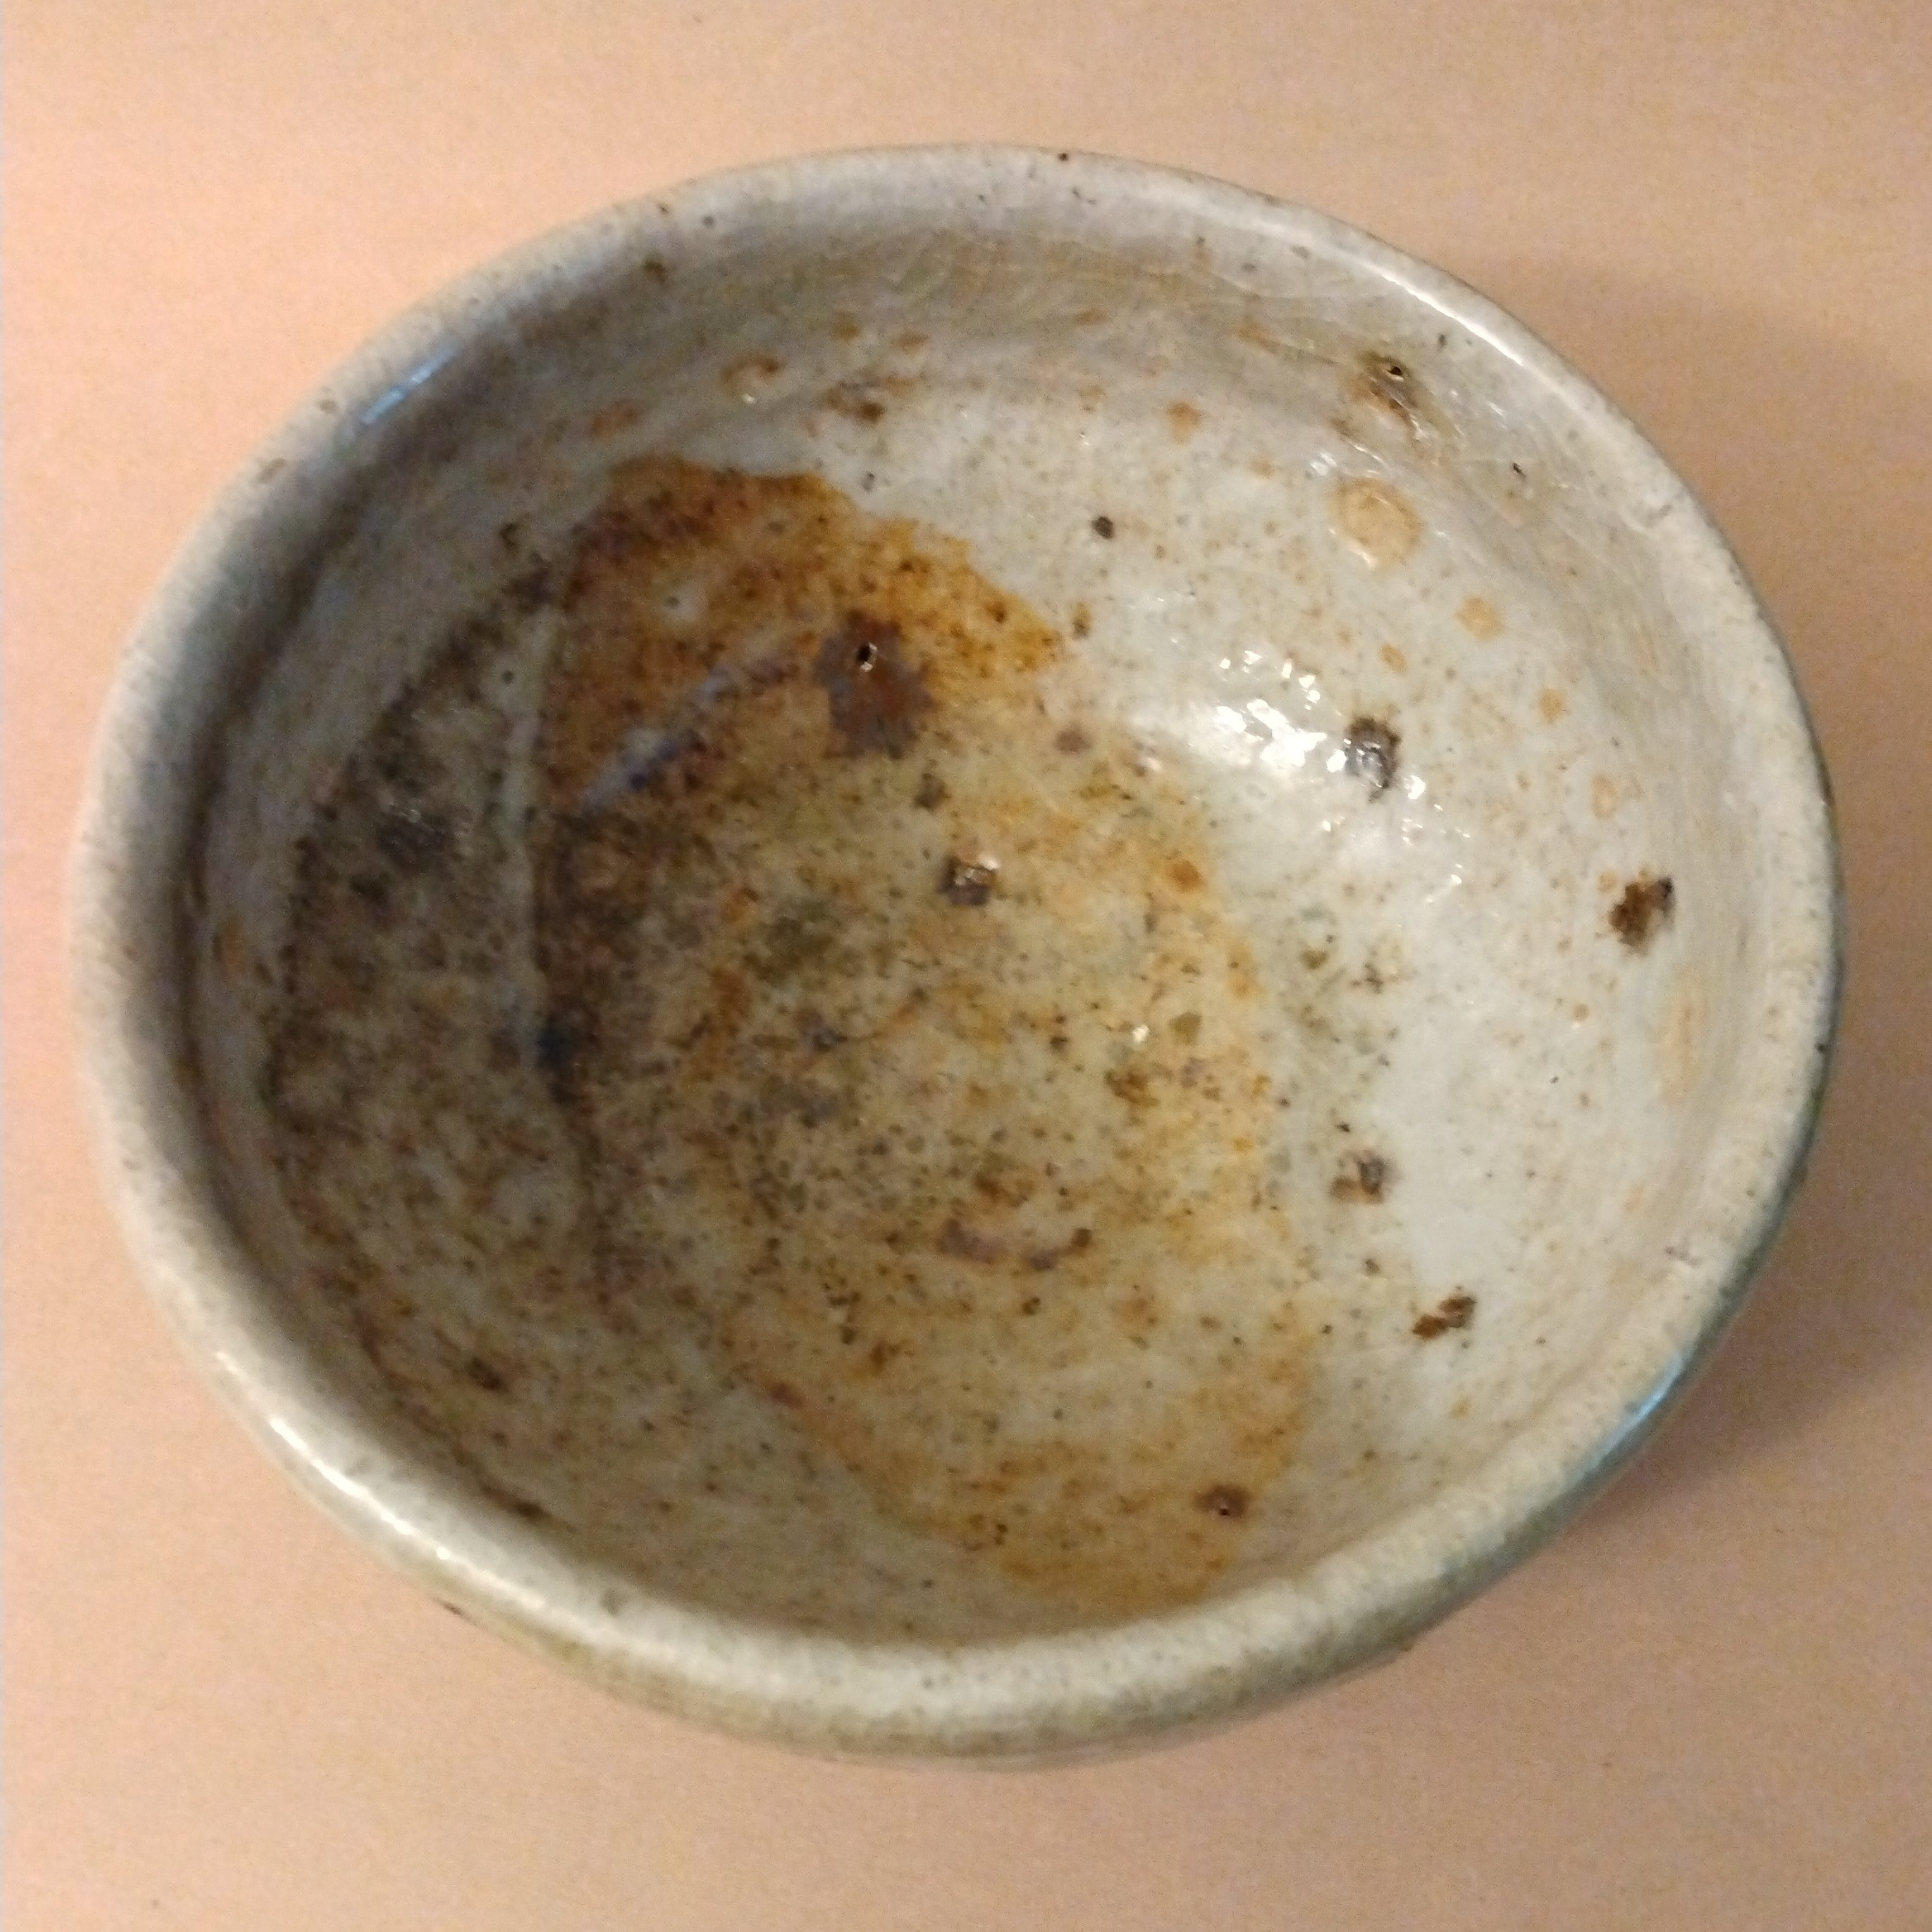 Wood-fired Shino Glaze Bowl with Feldspar loaded Clay, by George Gledhill